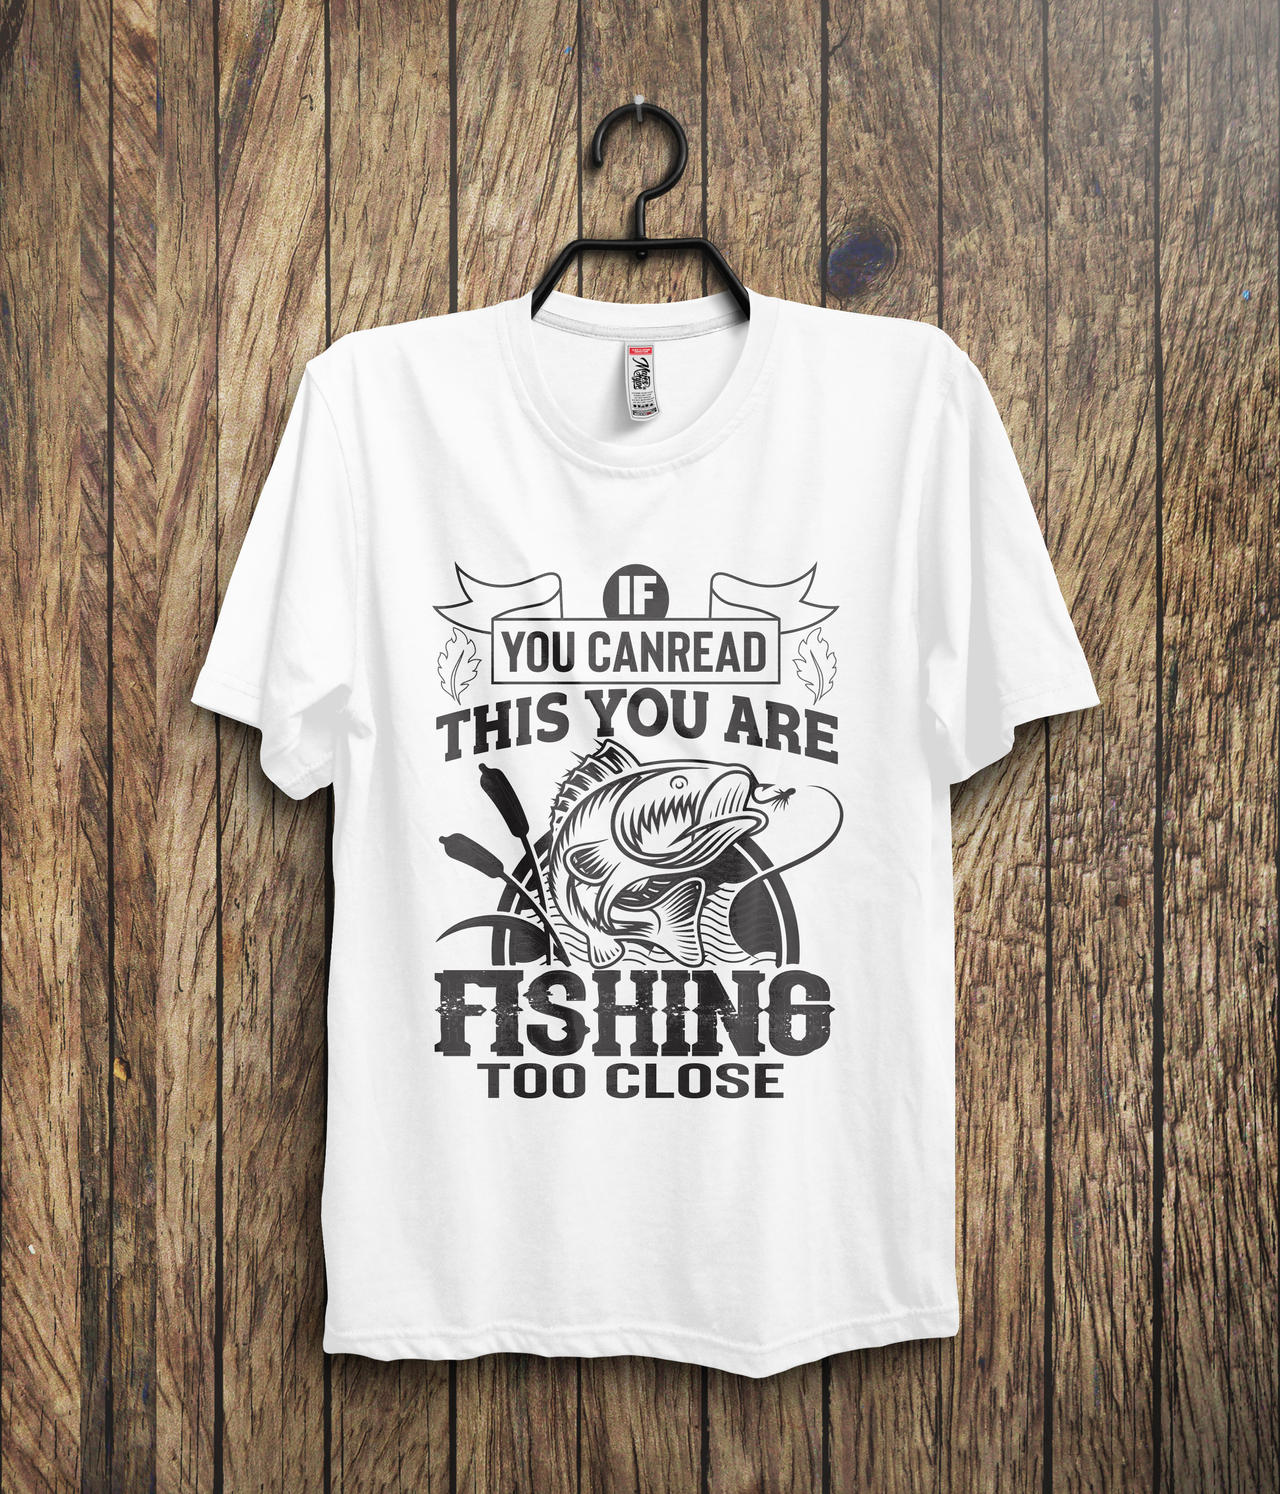 Fishing T-Shirt Design by Rajuahmedbd69 on DeviantArt